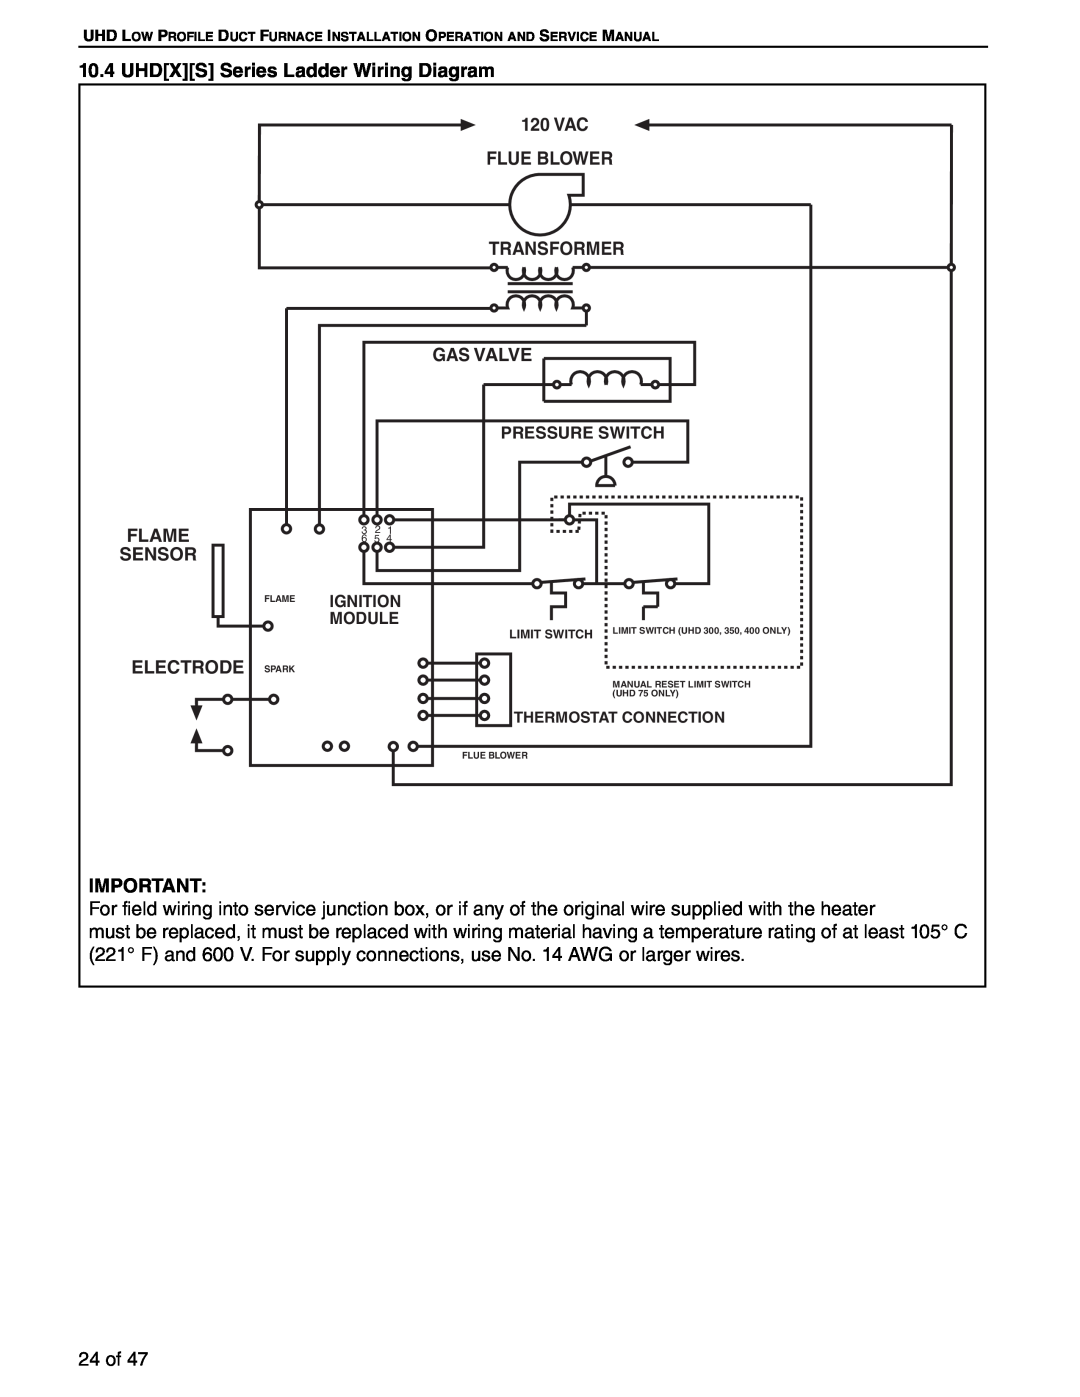 Roberts Gorden 125, 75, 100 service manual UHDXS Series Ladder Wiring Diagram 